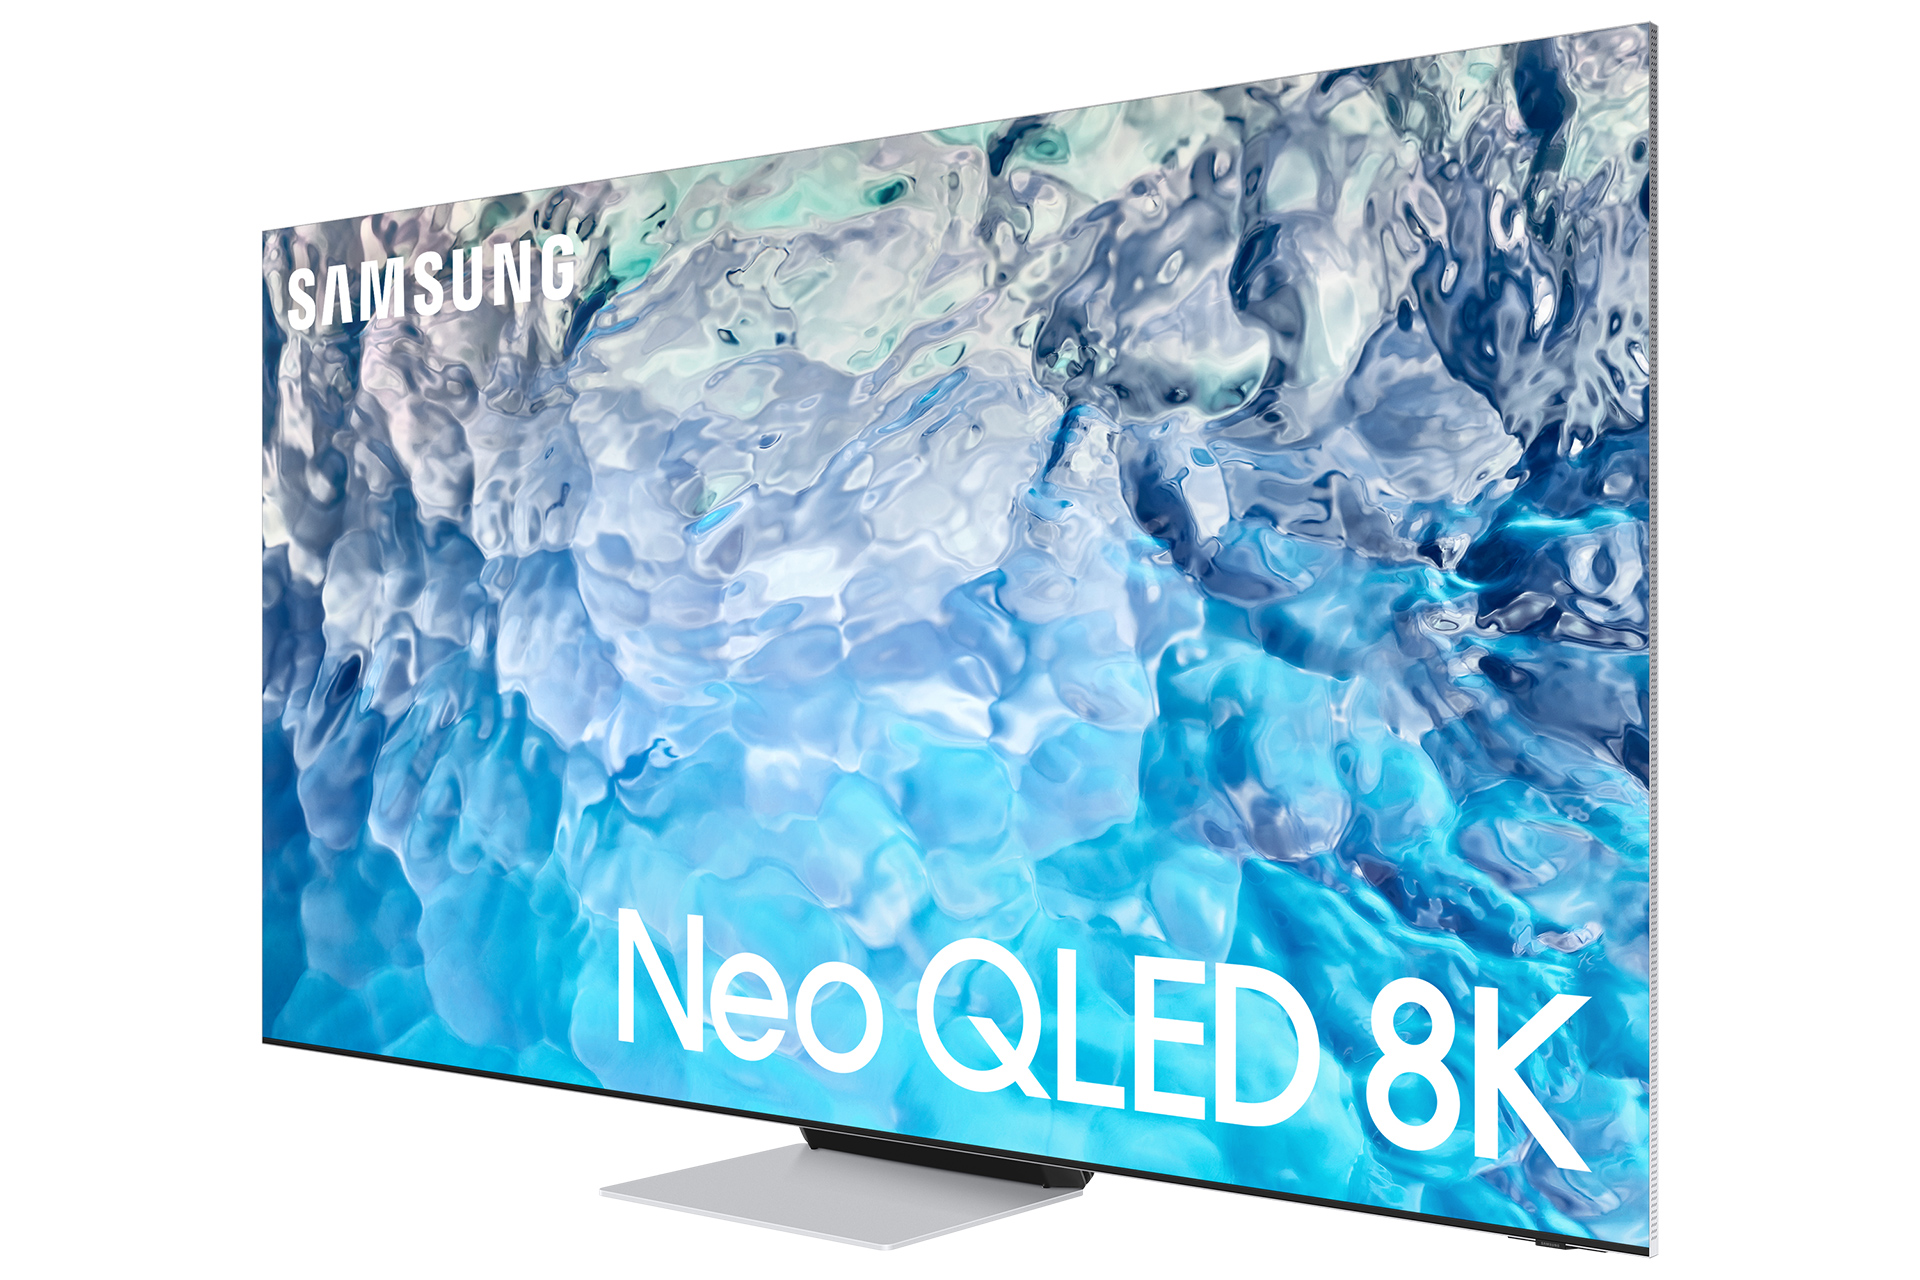 Samsung's 2022 QLED TV